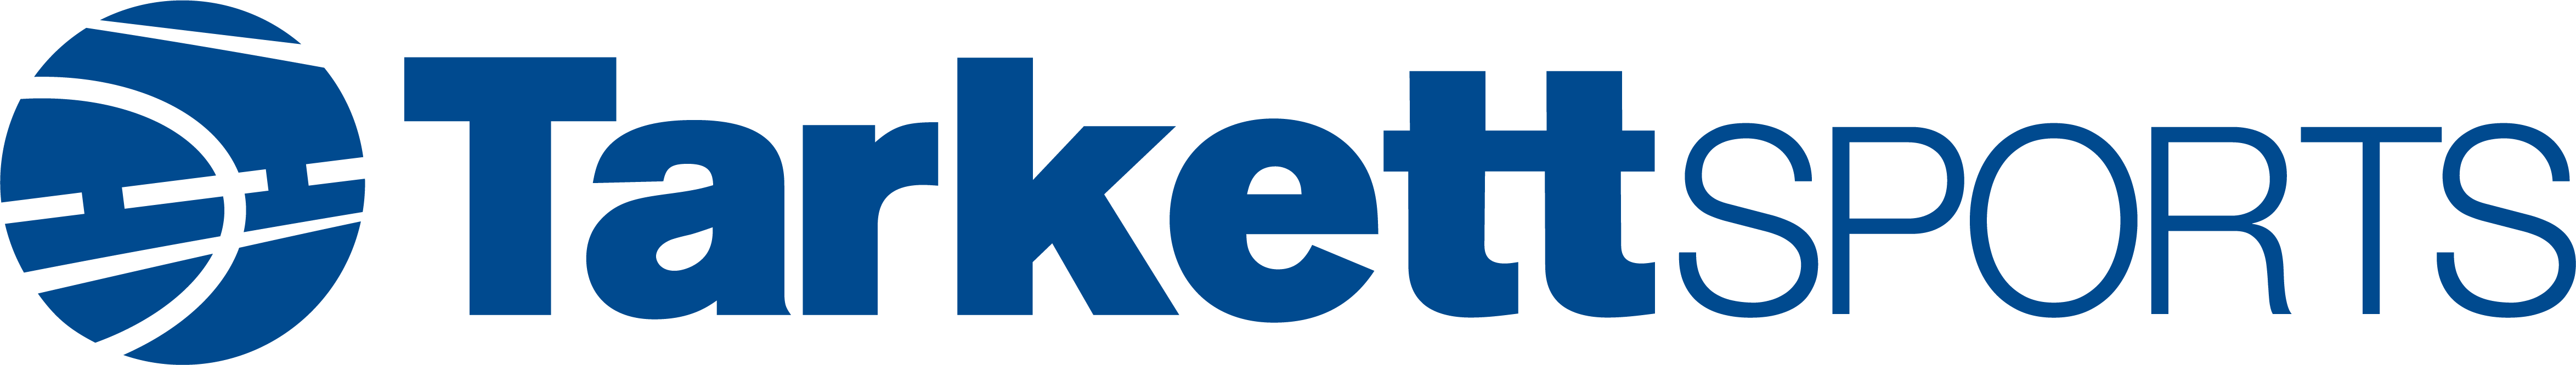 Le logo de Tarkett Sports